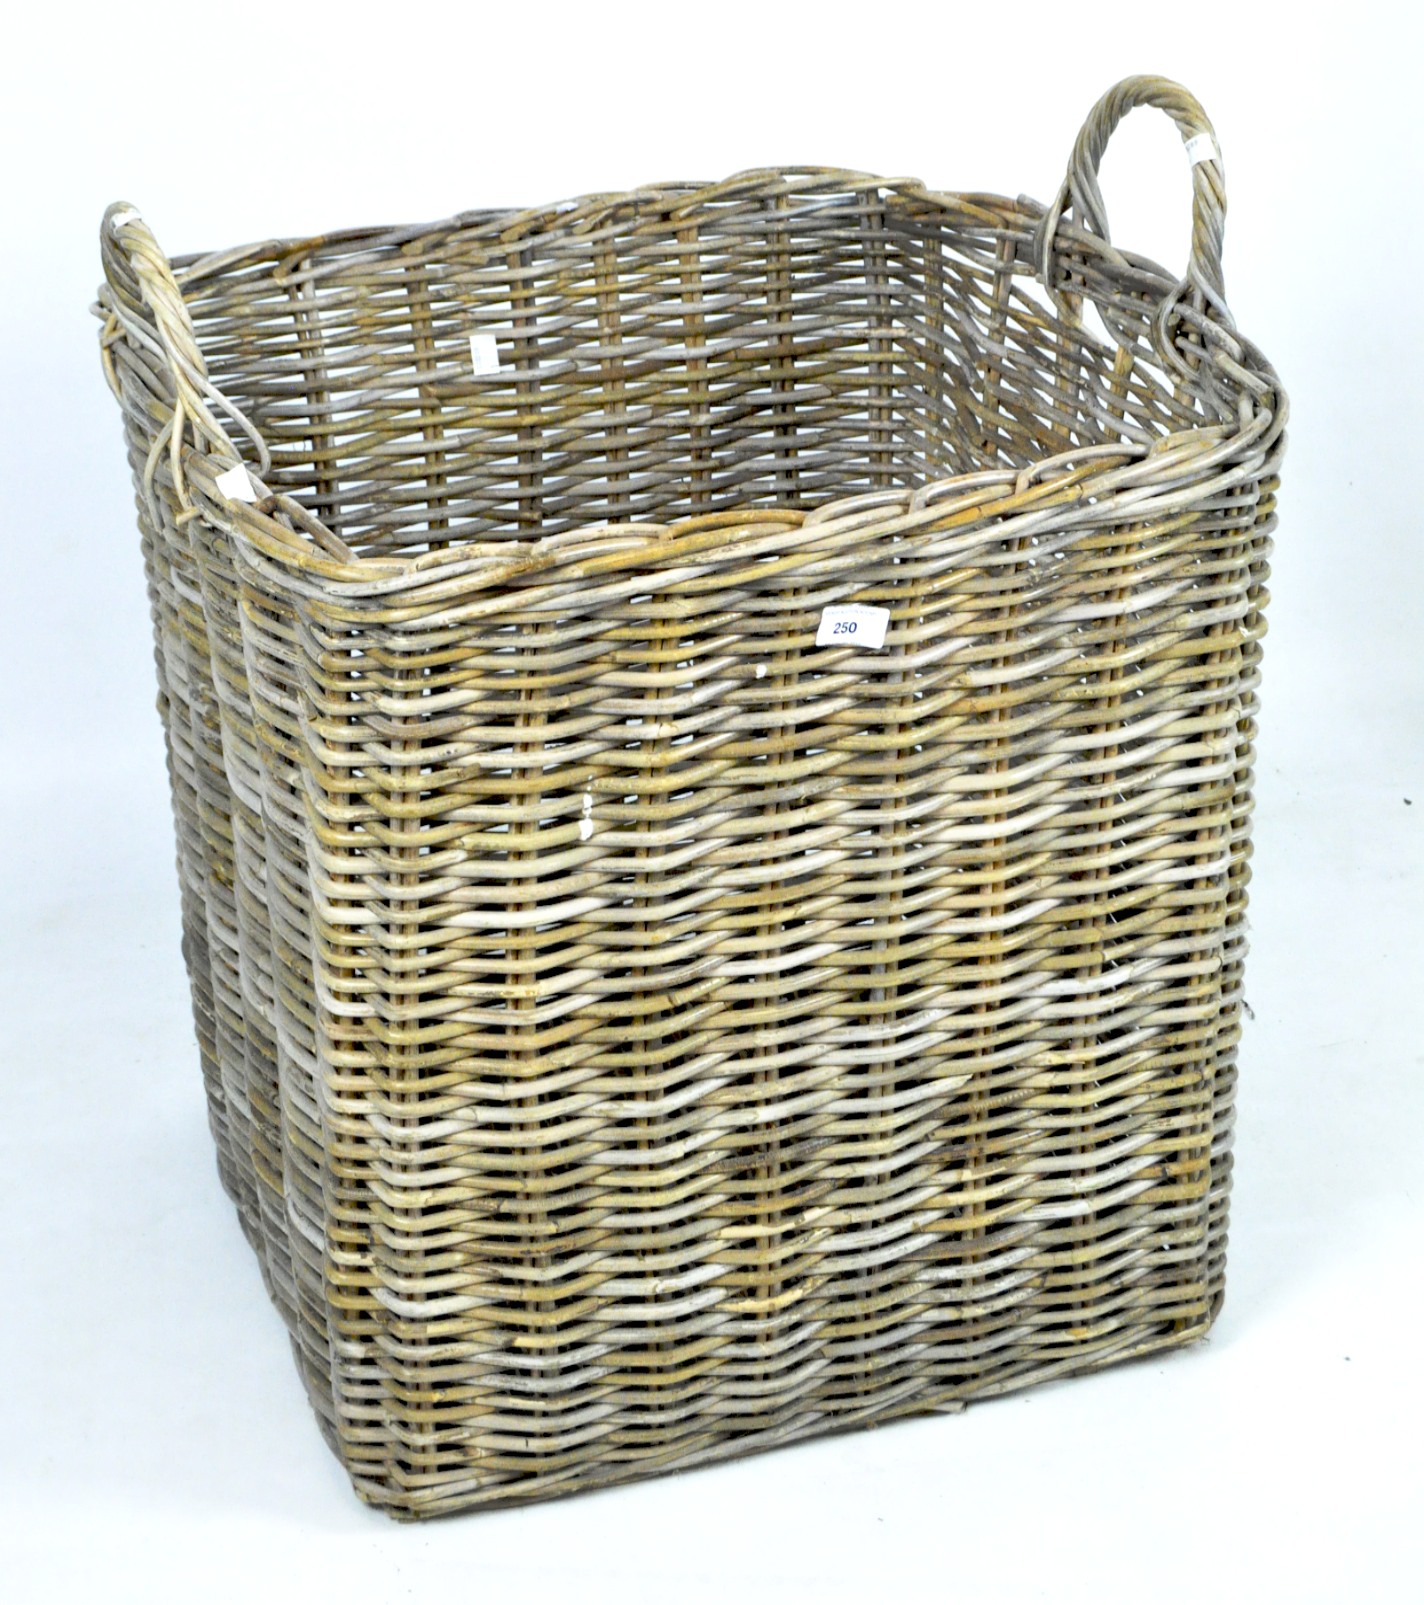 A large twin handled wicker storage basket,